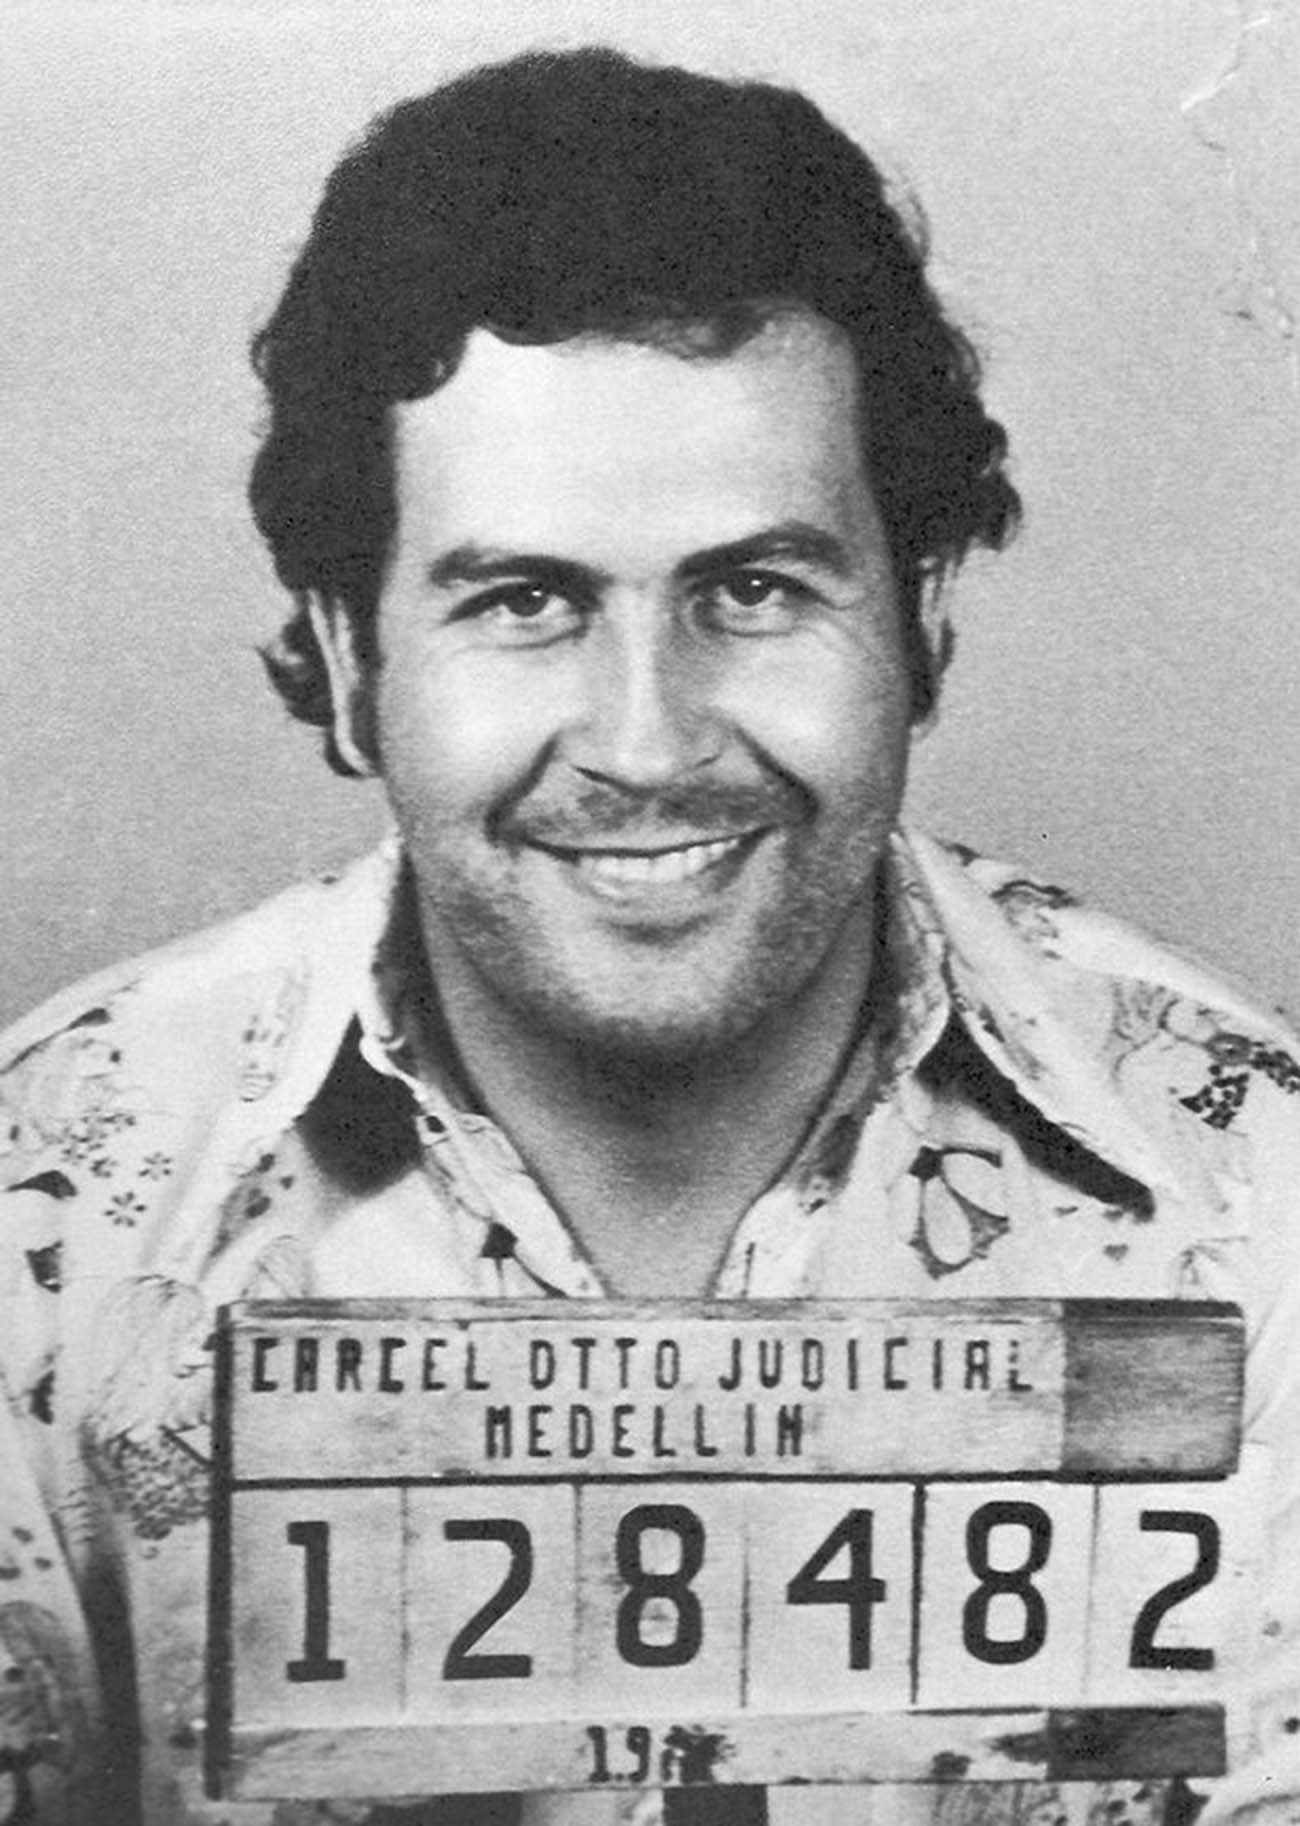 Pablo Escobar poses for a family photo outside of the White House 1981   Rare Historical Photos